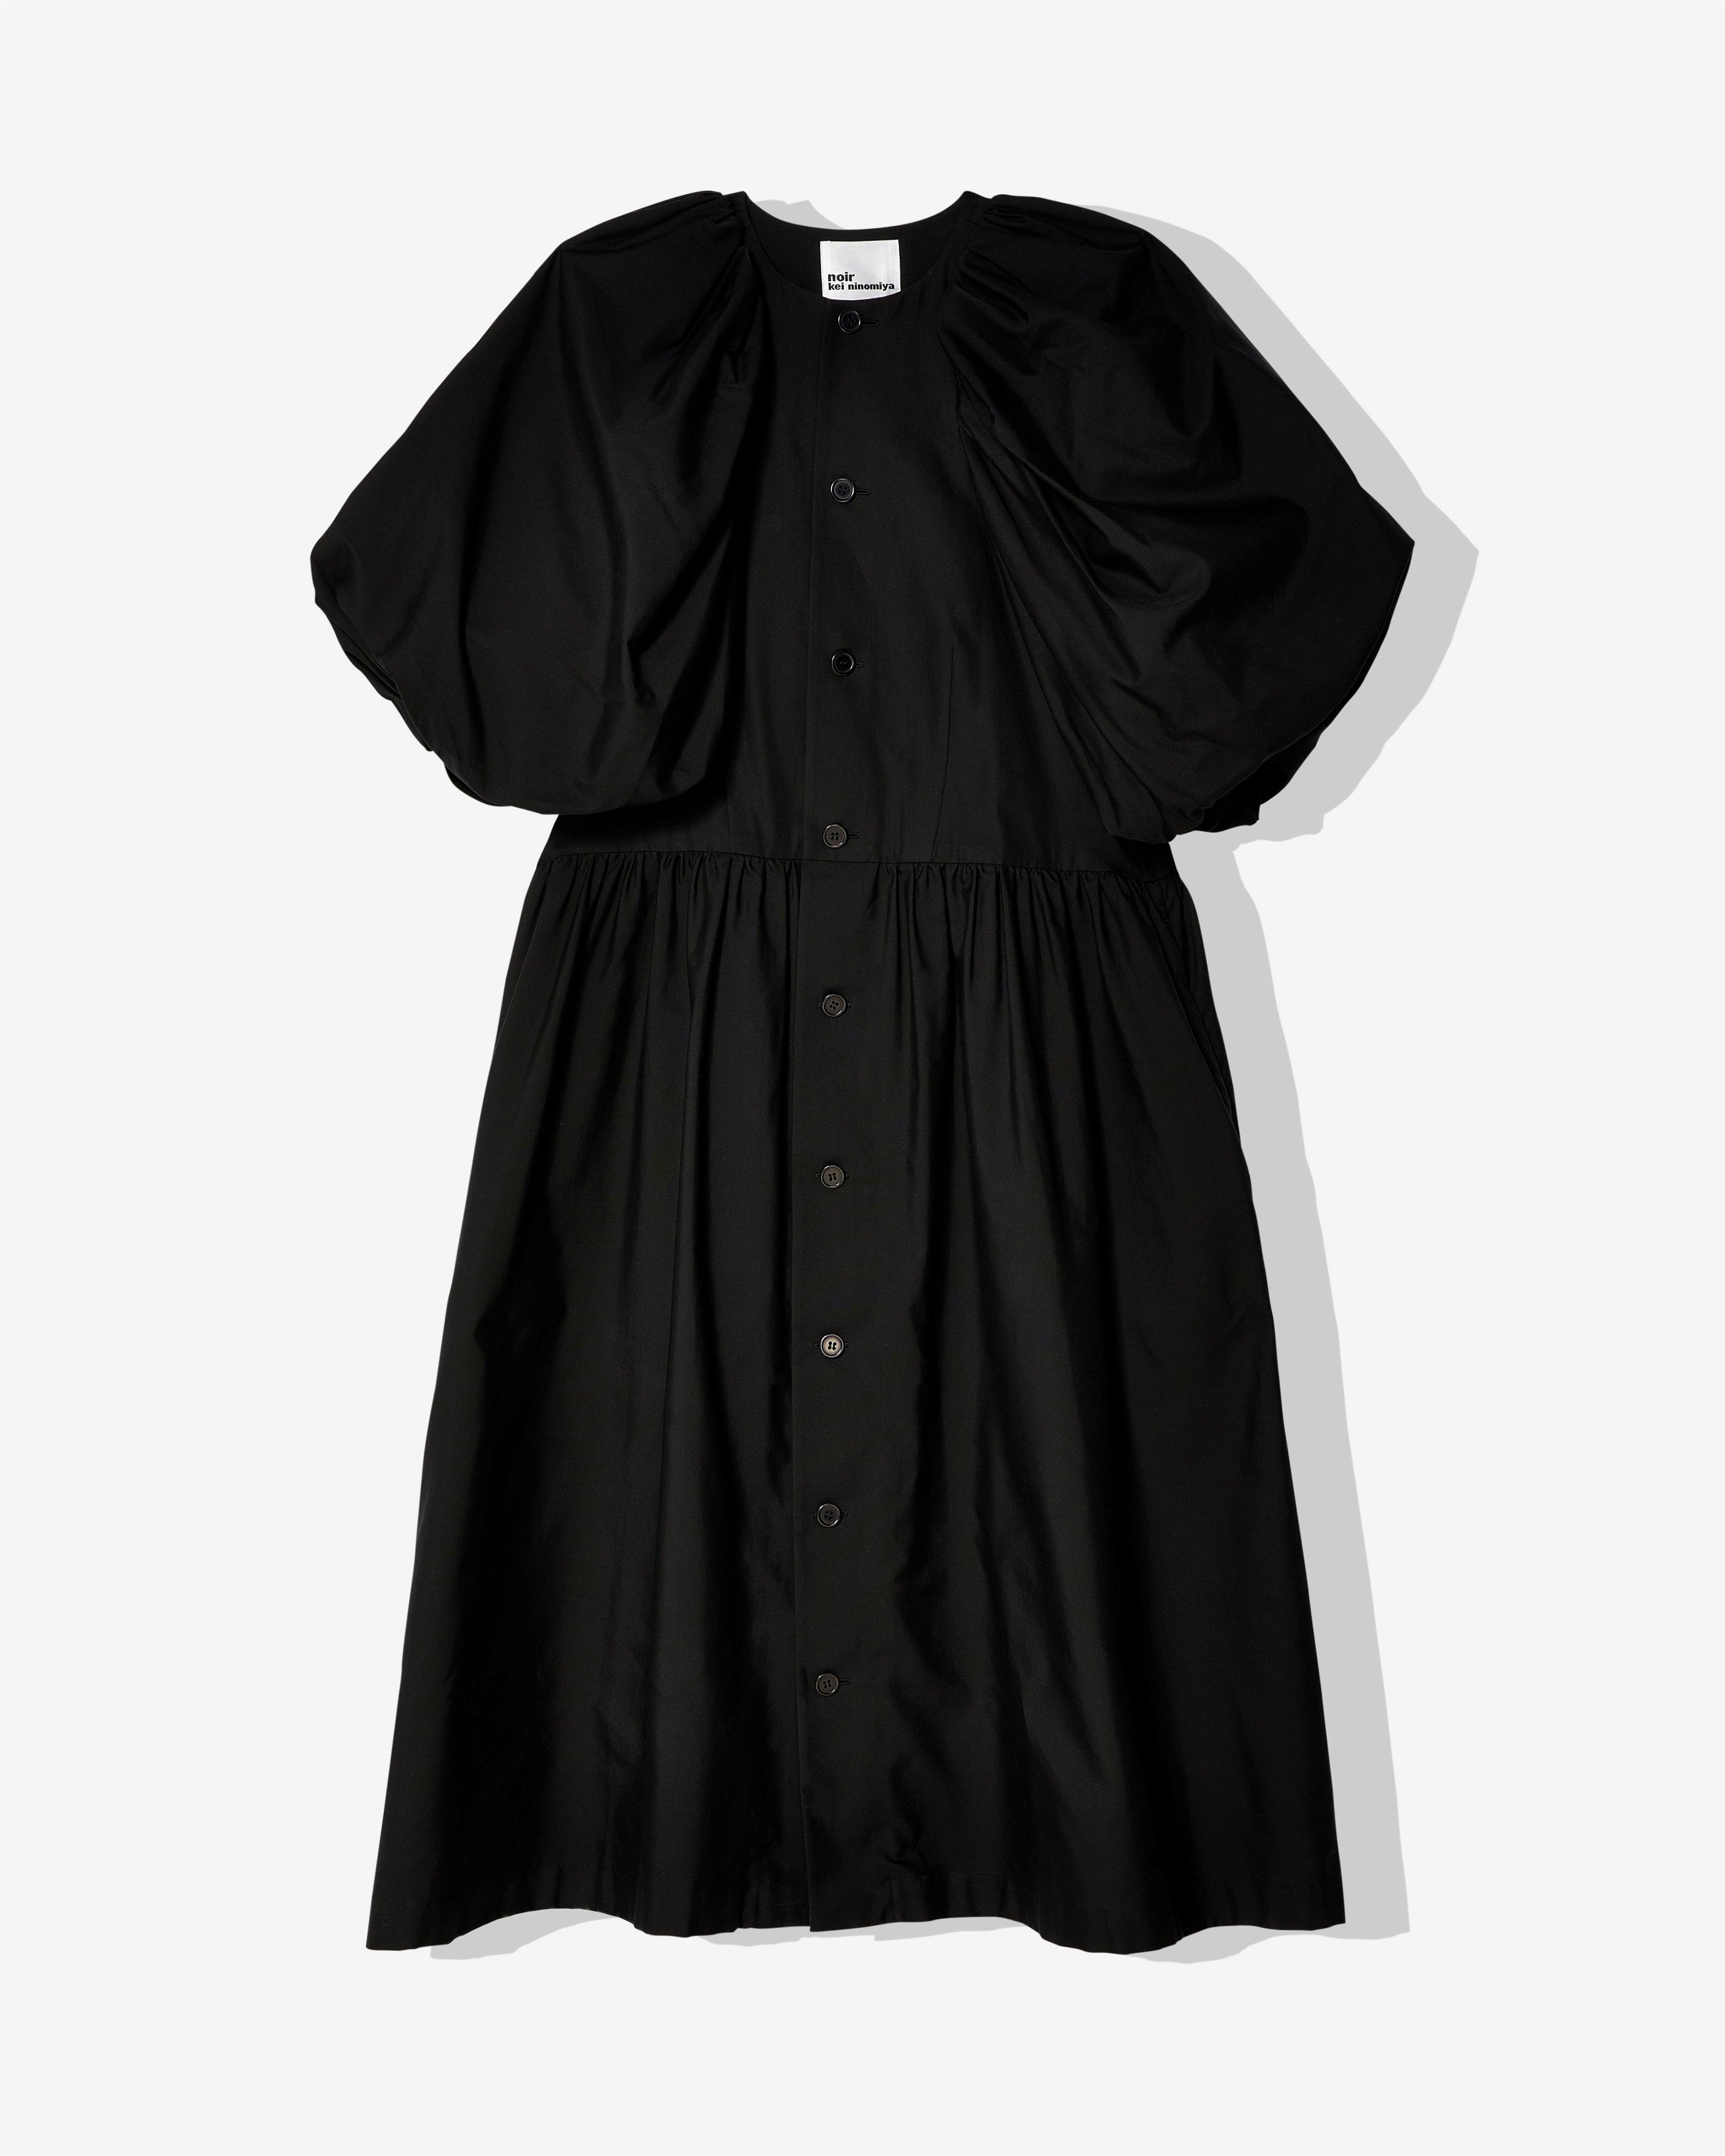 Noir Kei Ninomiya - Women's Puff Sleeve Dress - (Black) by NOIR KEI NINOMIYA